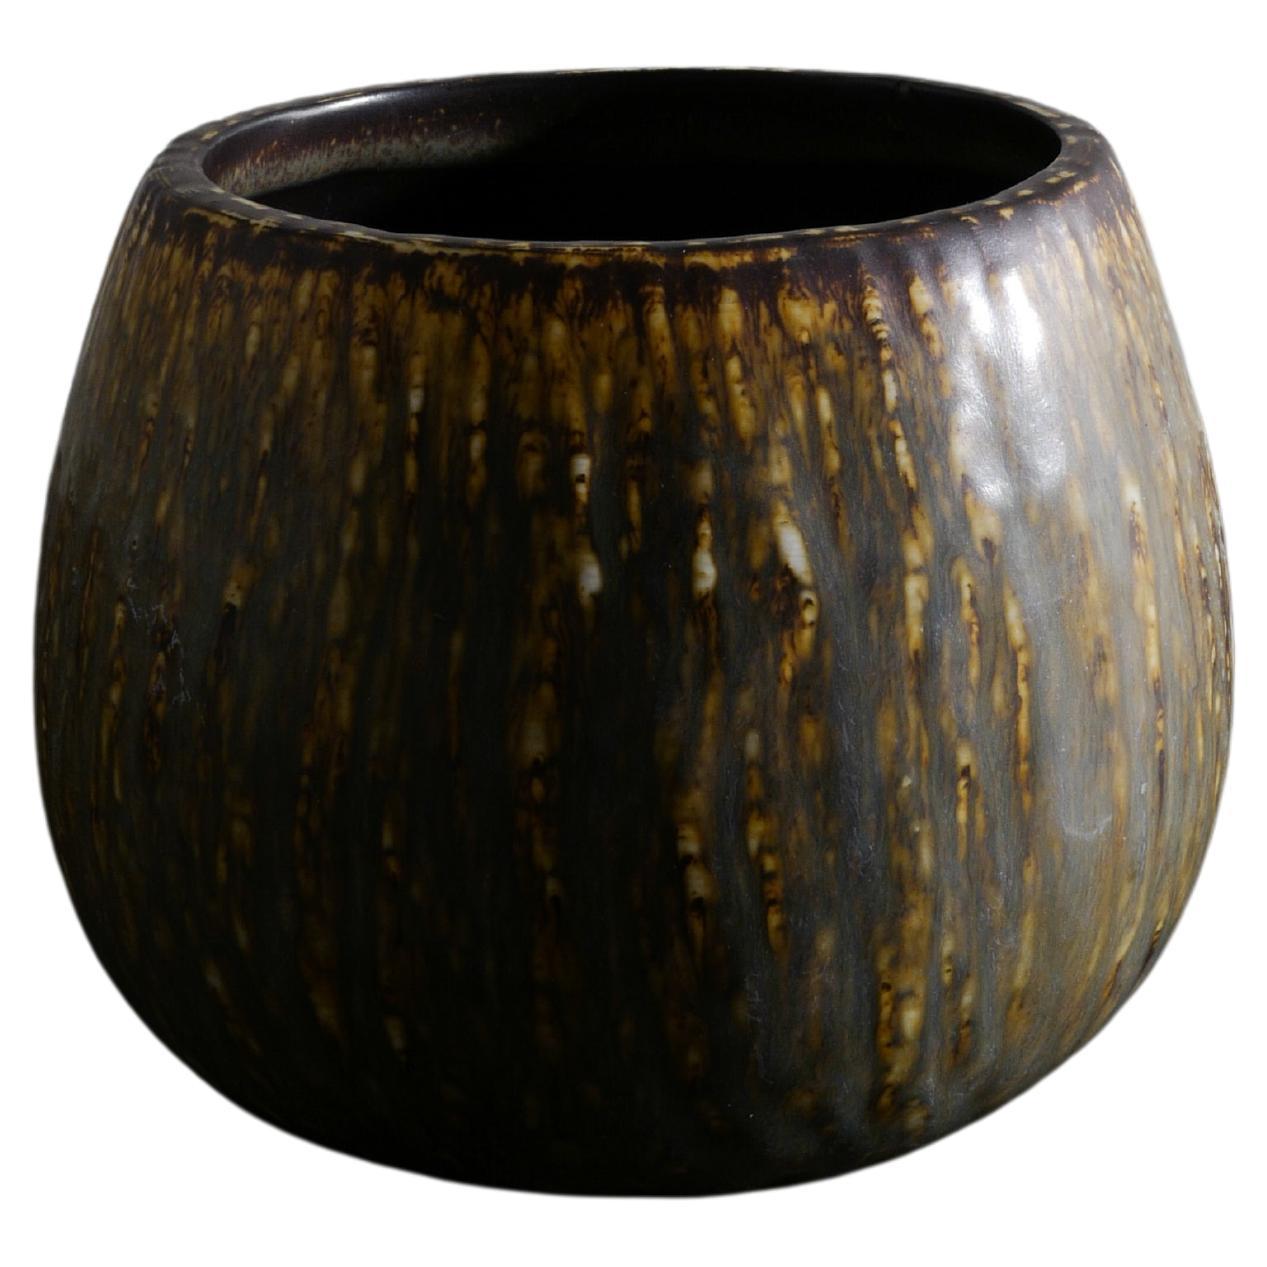 Gunnar Nylund "Rubus" Mid Century Ceramic Bowl Vase for Rörstrand Sweden, 1950s